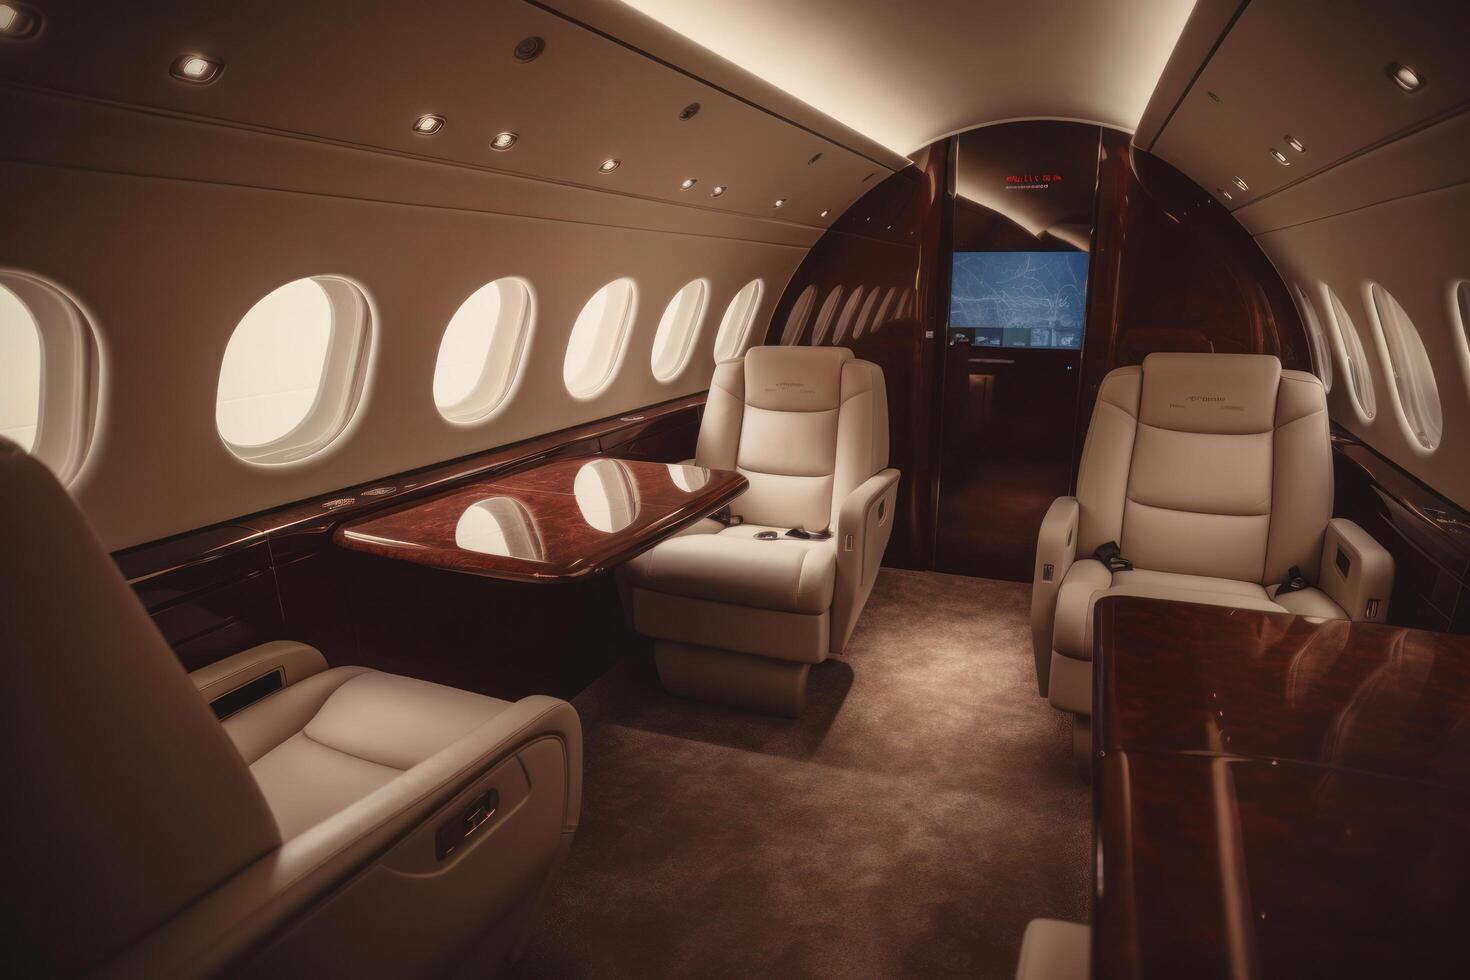 Interior of luxurious private jet Illustration photo